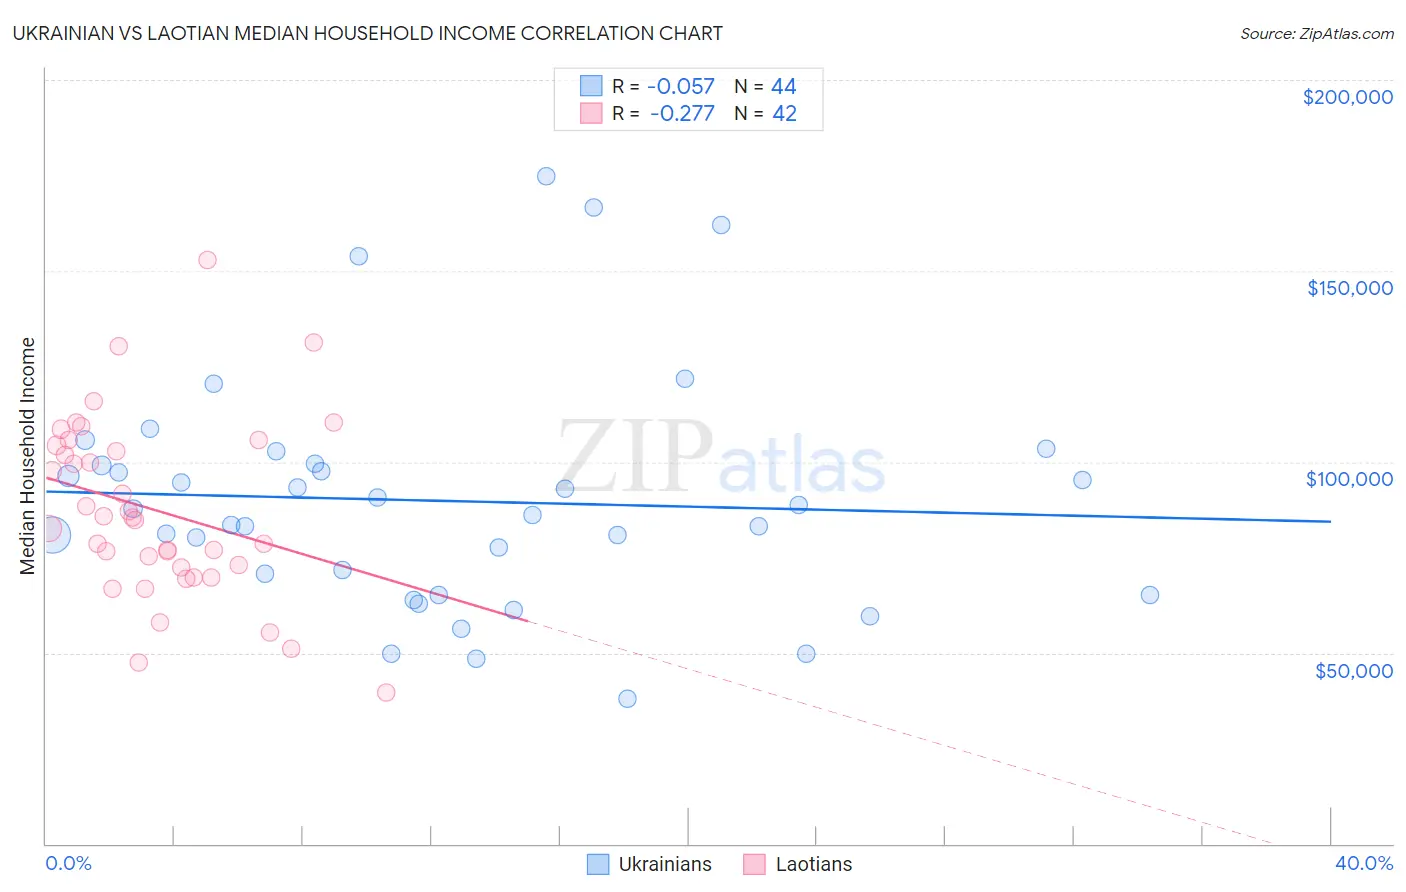 Ukrainian vs Laotian Median Household Income